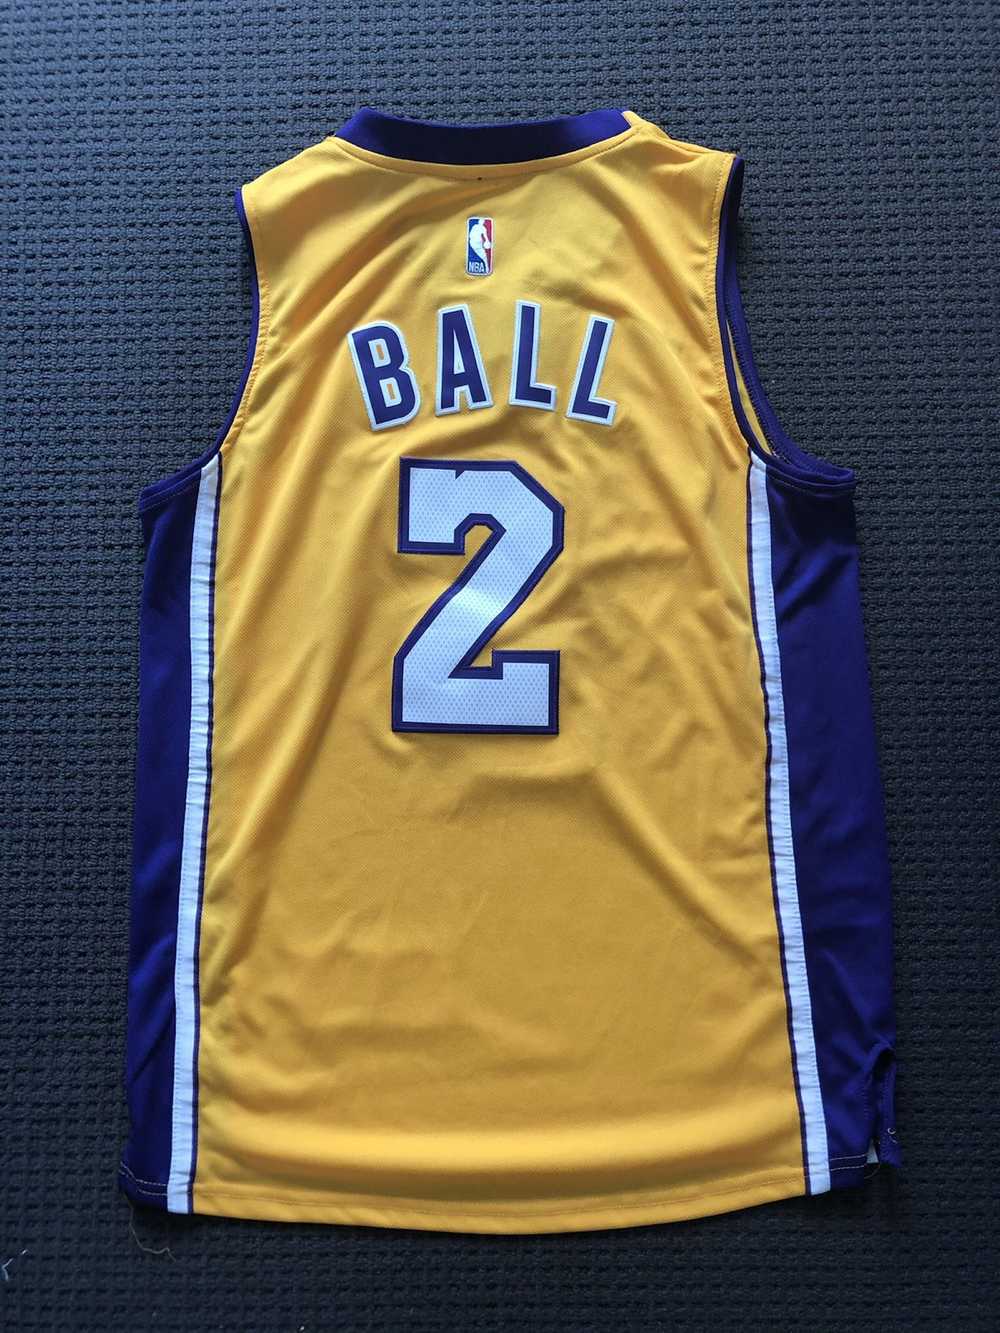 Adidas Lonzo Ball Home Lakers Jersey Size M - image 2